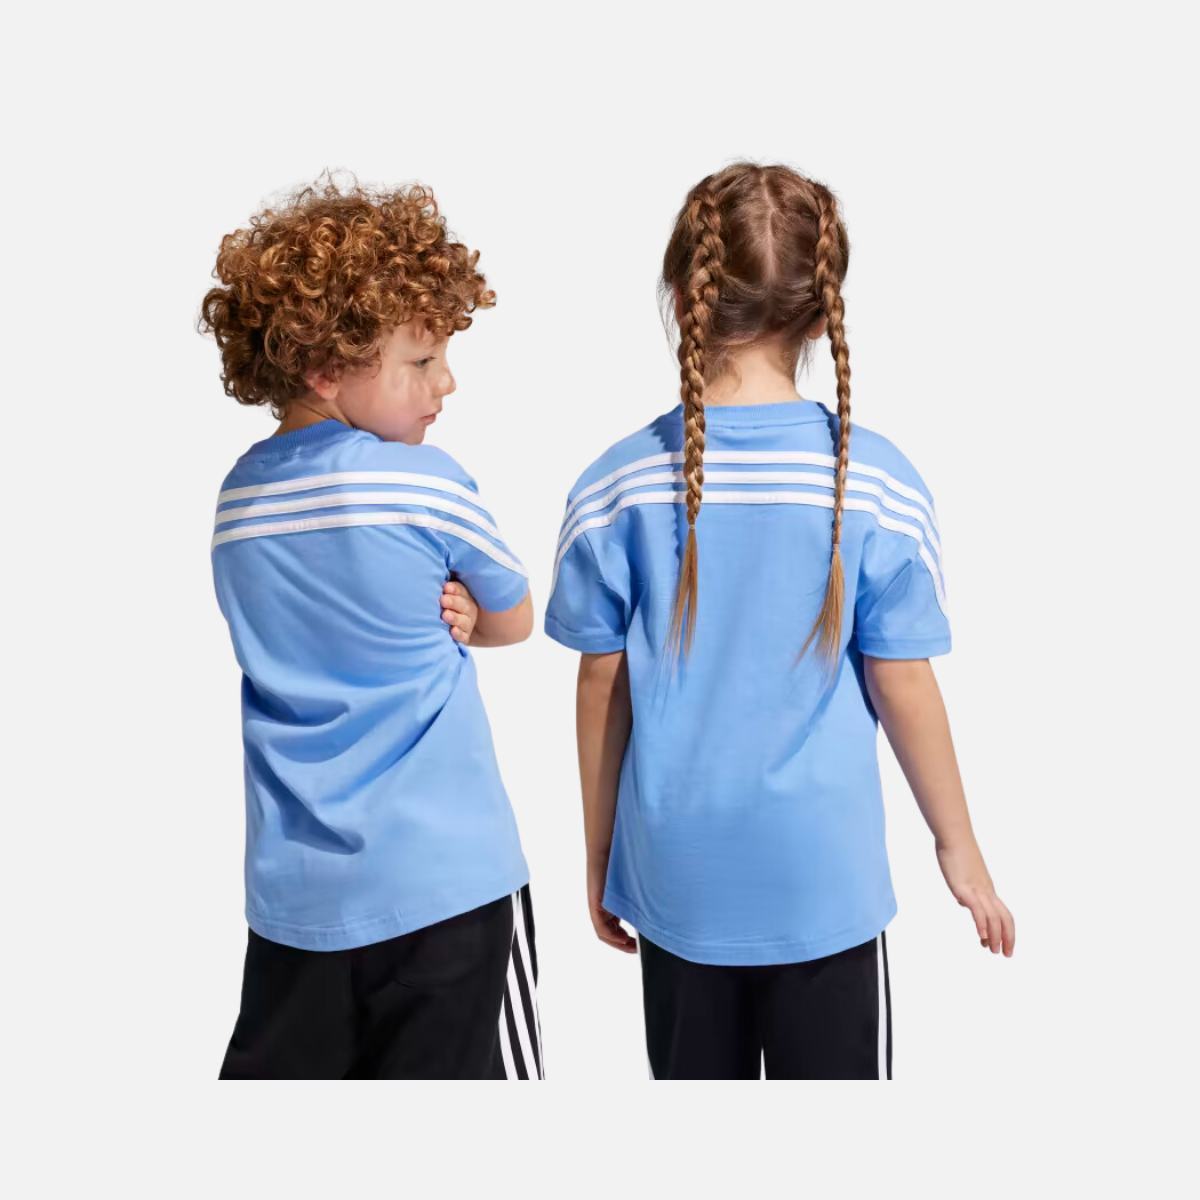 Adidas Finding Nemo Kids Unisex T-shirt (3-7 Year) - Blue Fusion/White